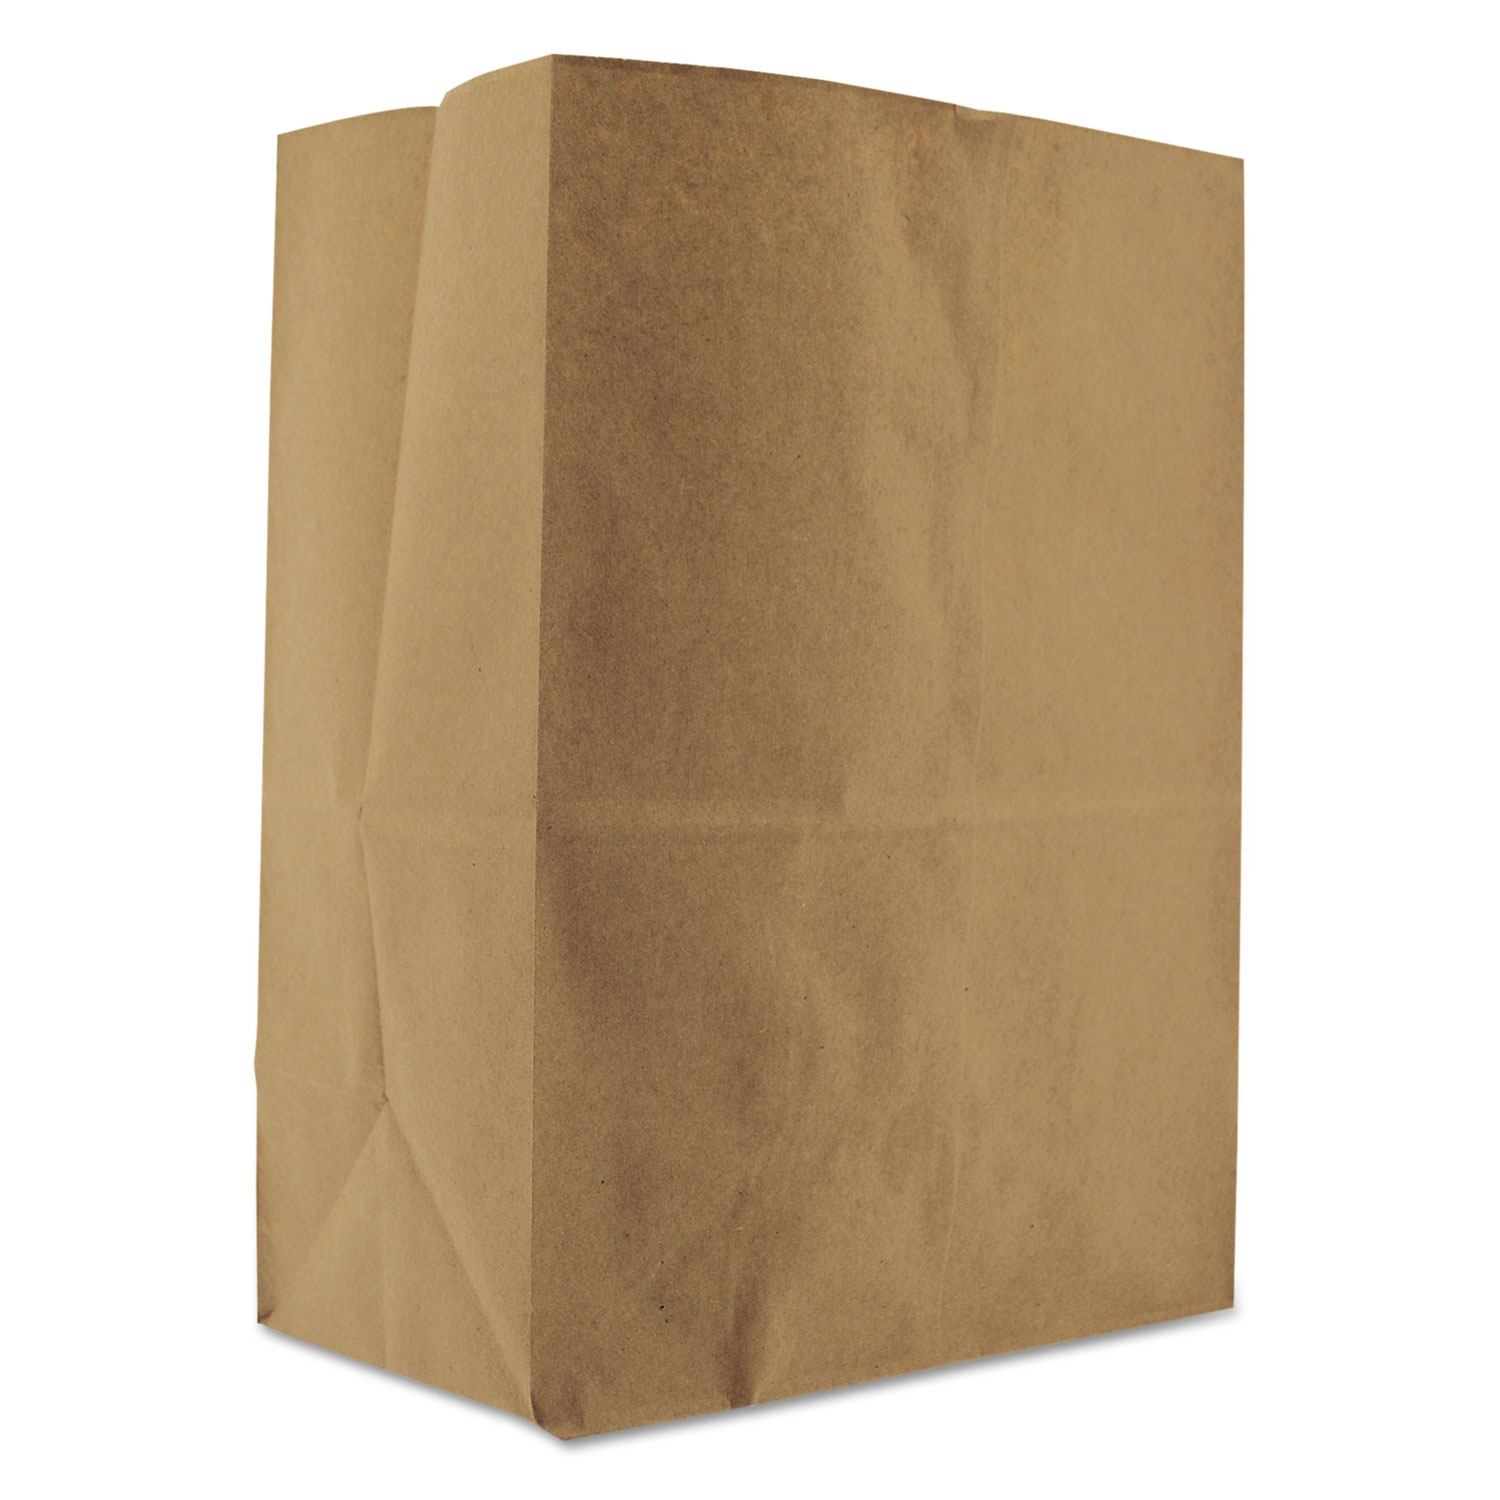  General 80082 Grocery Paper Bags, 52 lbs Capacity, 1/8 BBL, 10.13w x 6.75d x 14.38h, Kraft, 500 Bags (BAGSK1852) 